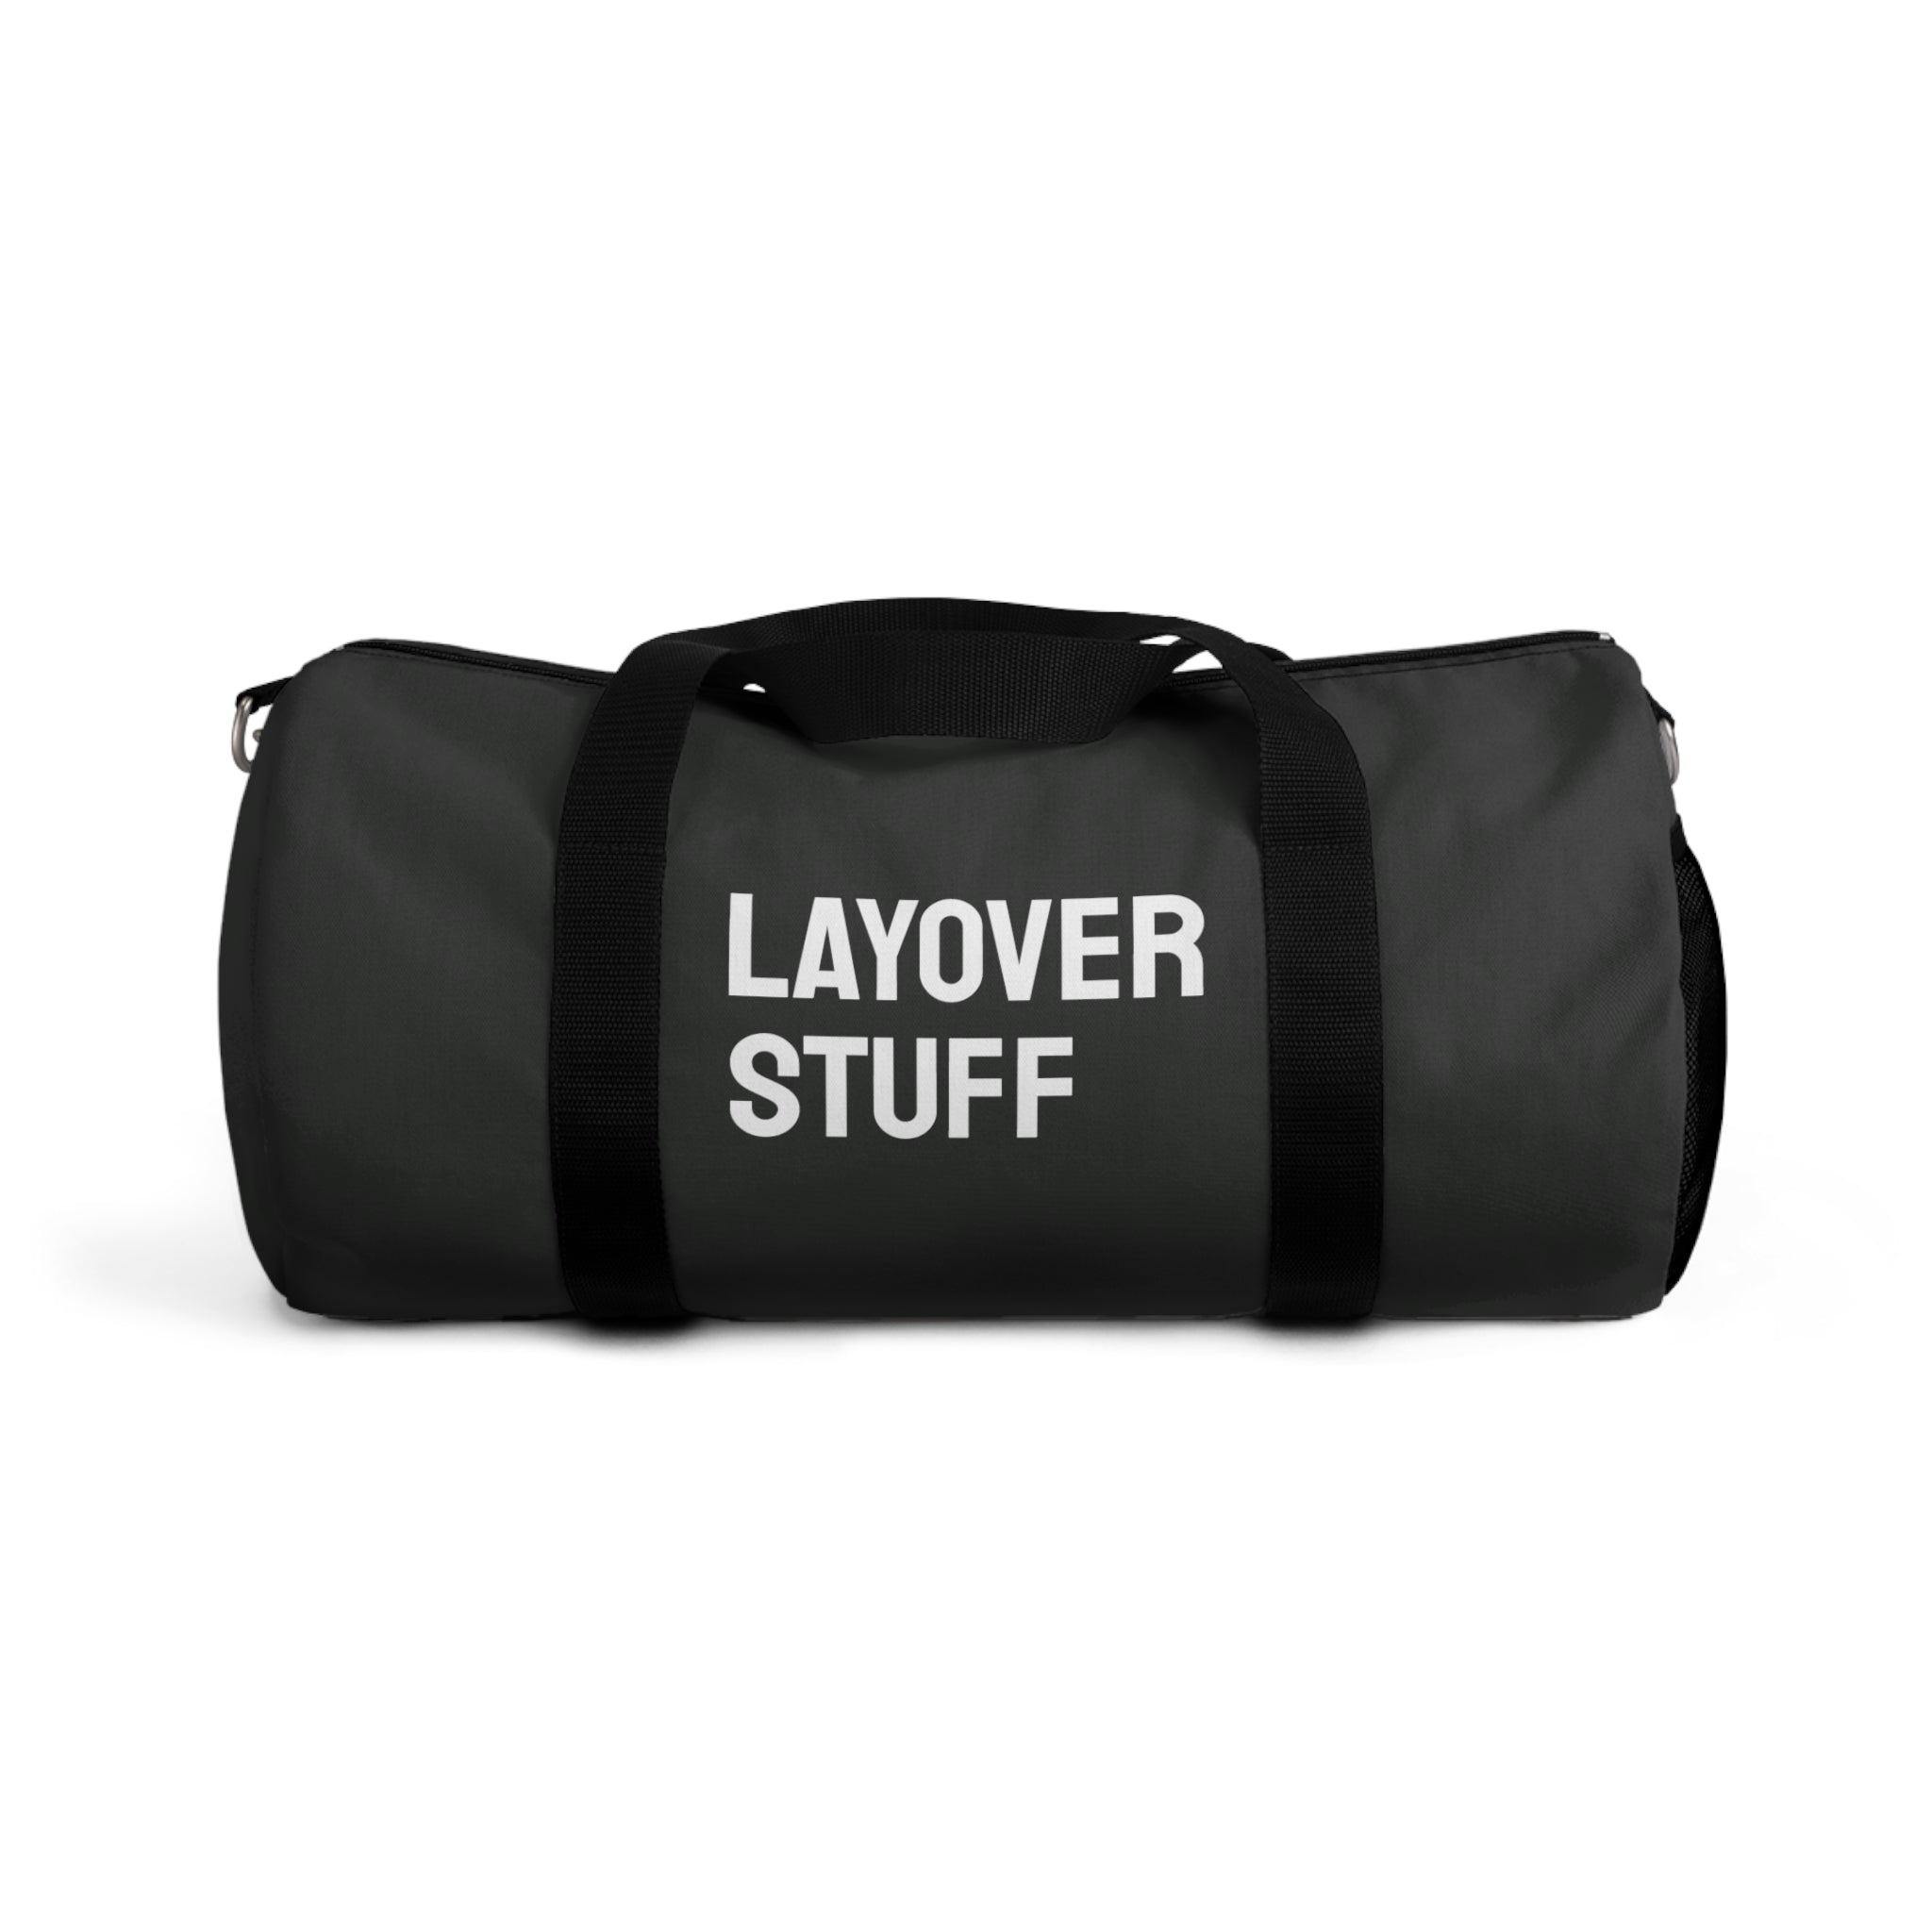 Layover stuff Duffle Bag (Black)